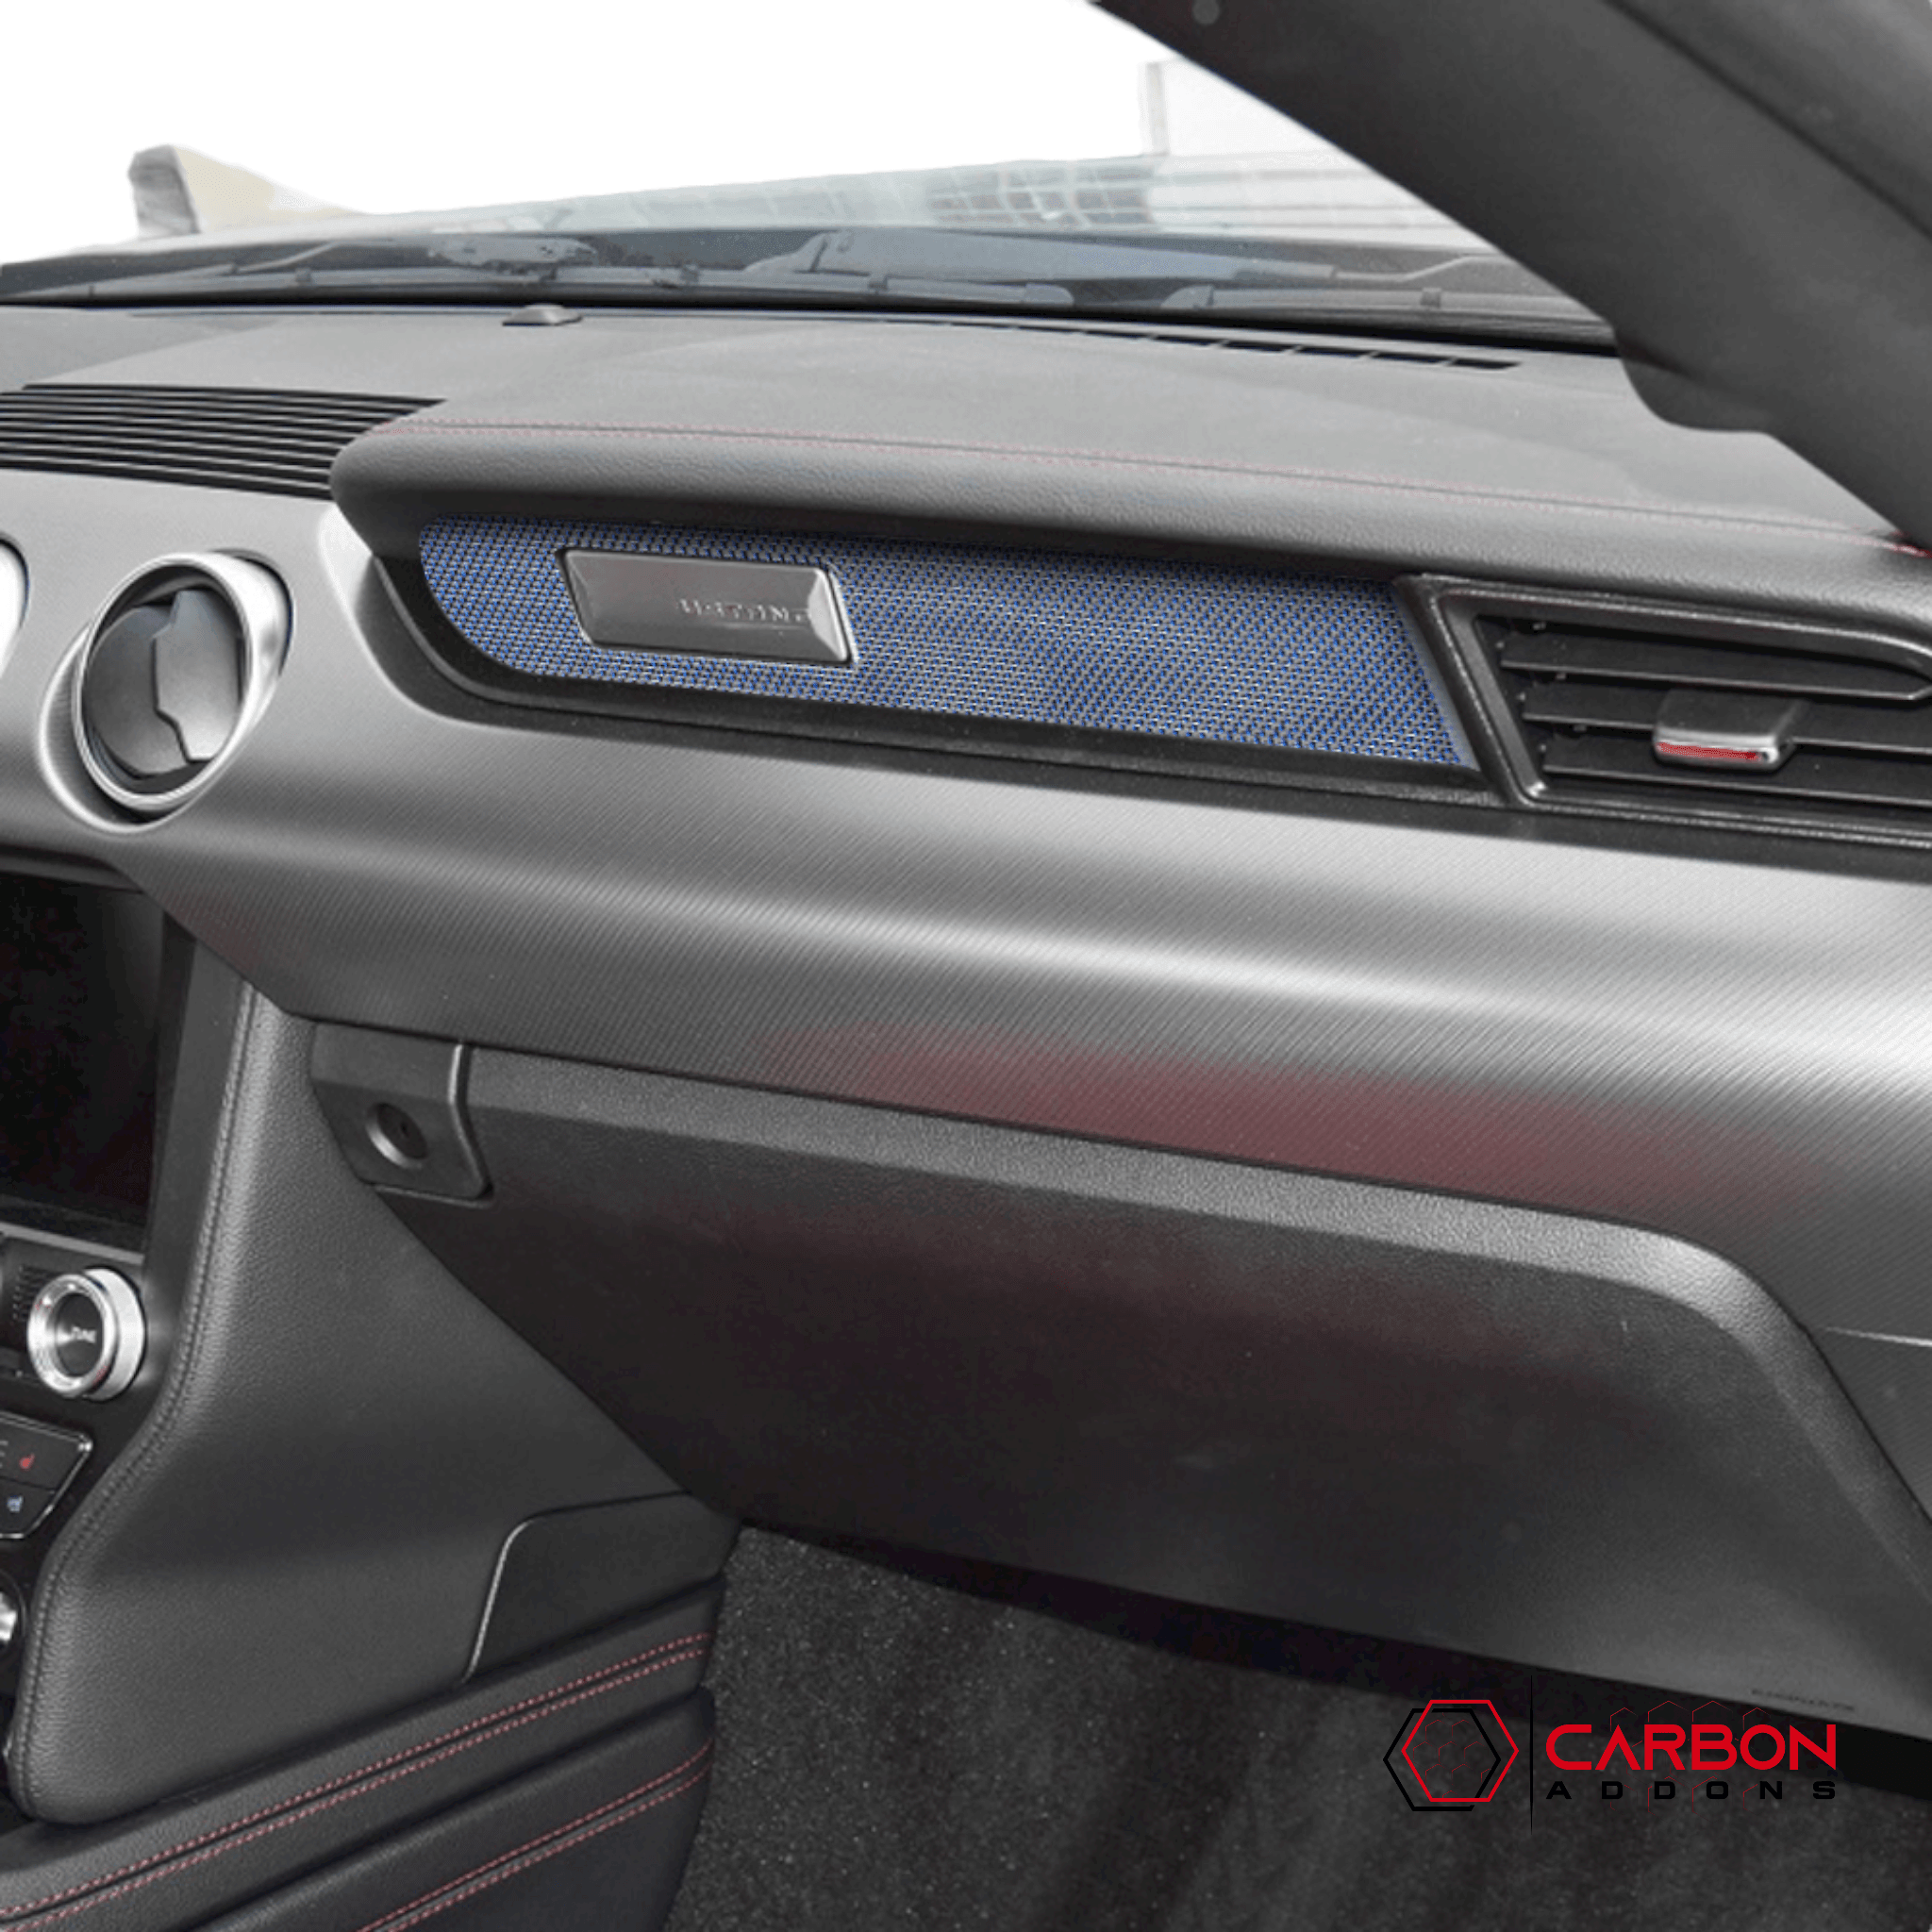 Reflective Carbon Fiber Passenger Dashboard Emblem Trim Overlay for Ford Mustang 2015-2023 - carbonaddons Carbon Fiber Parts, Accessories, Upgrades, Mods